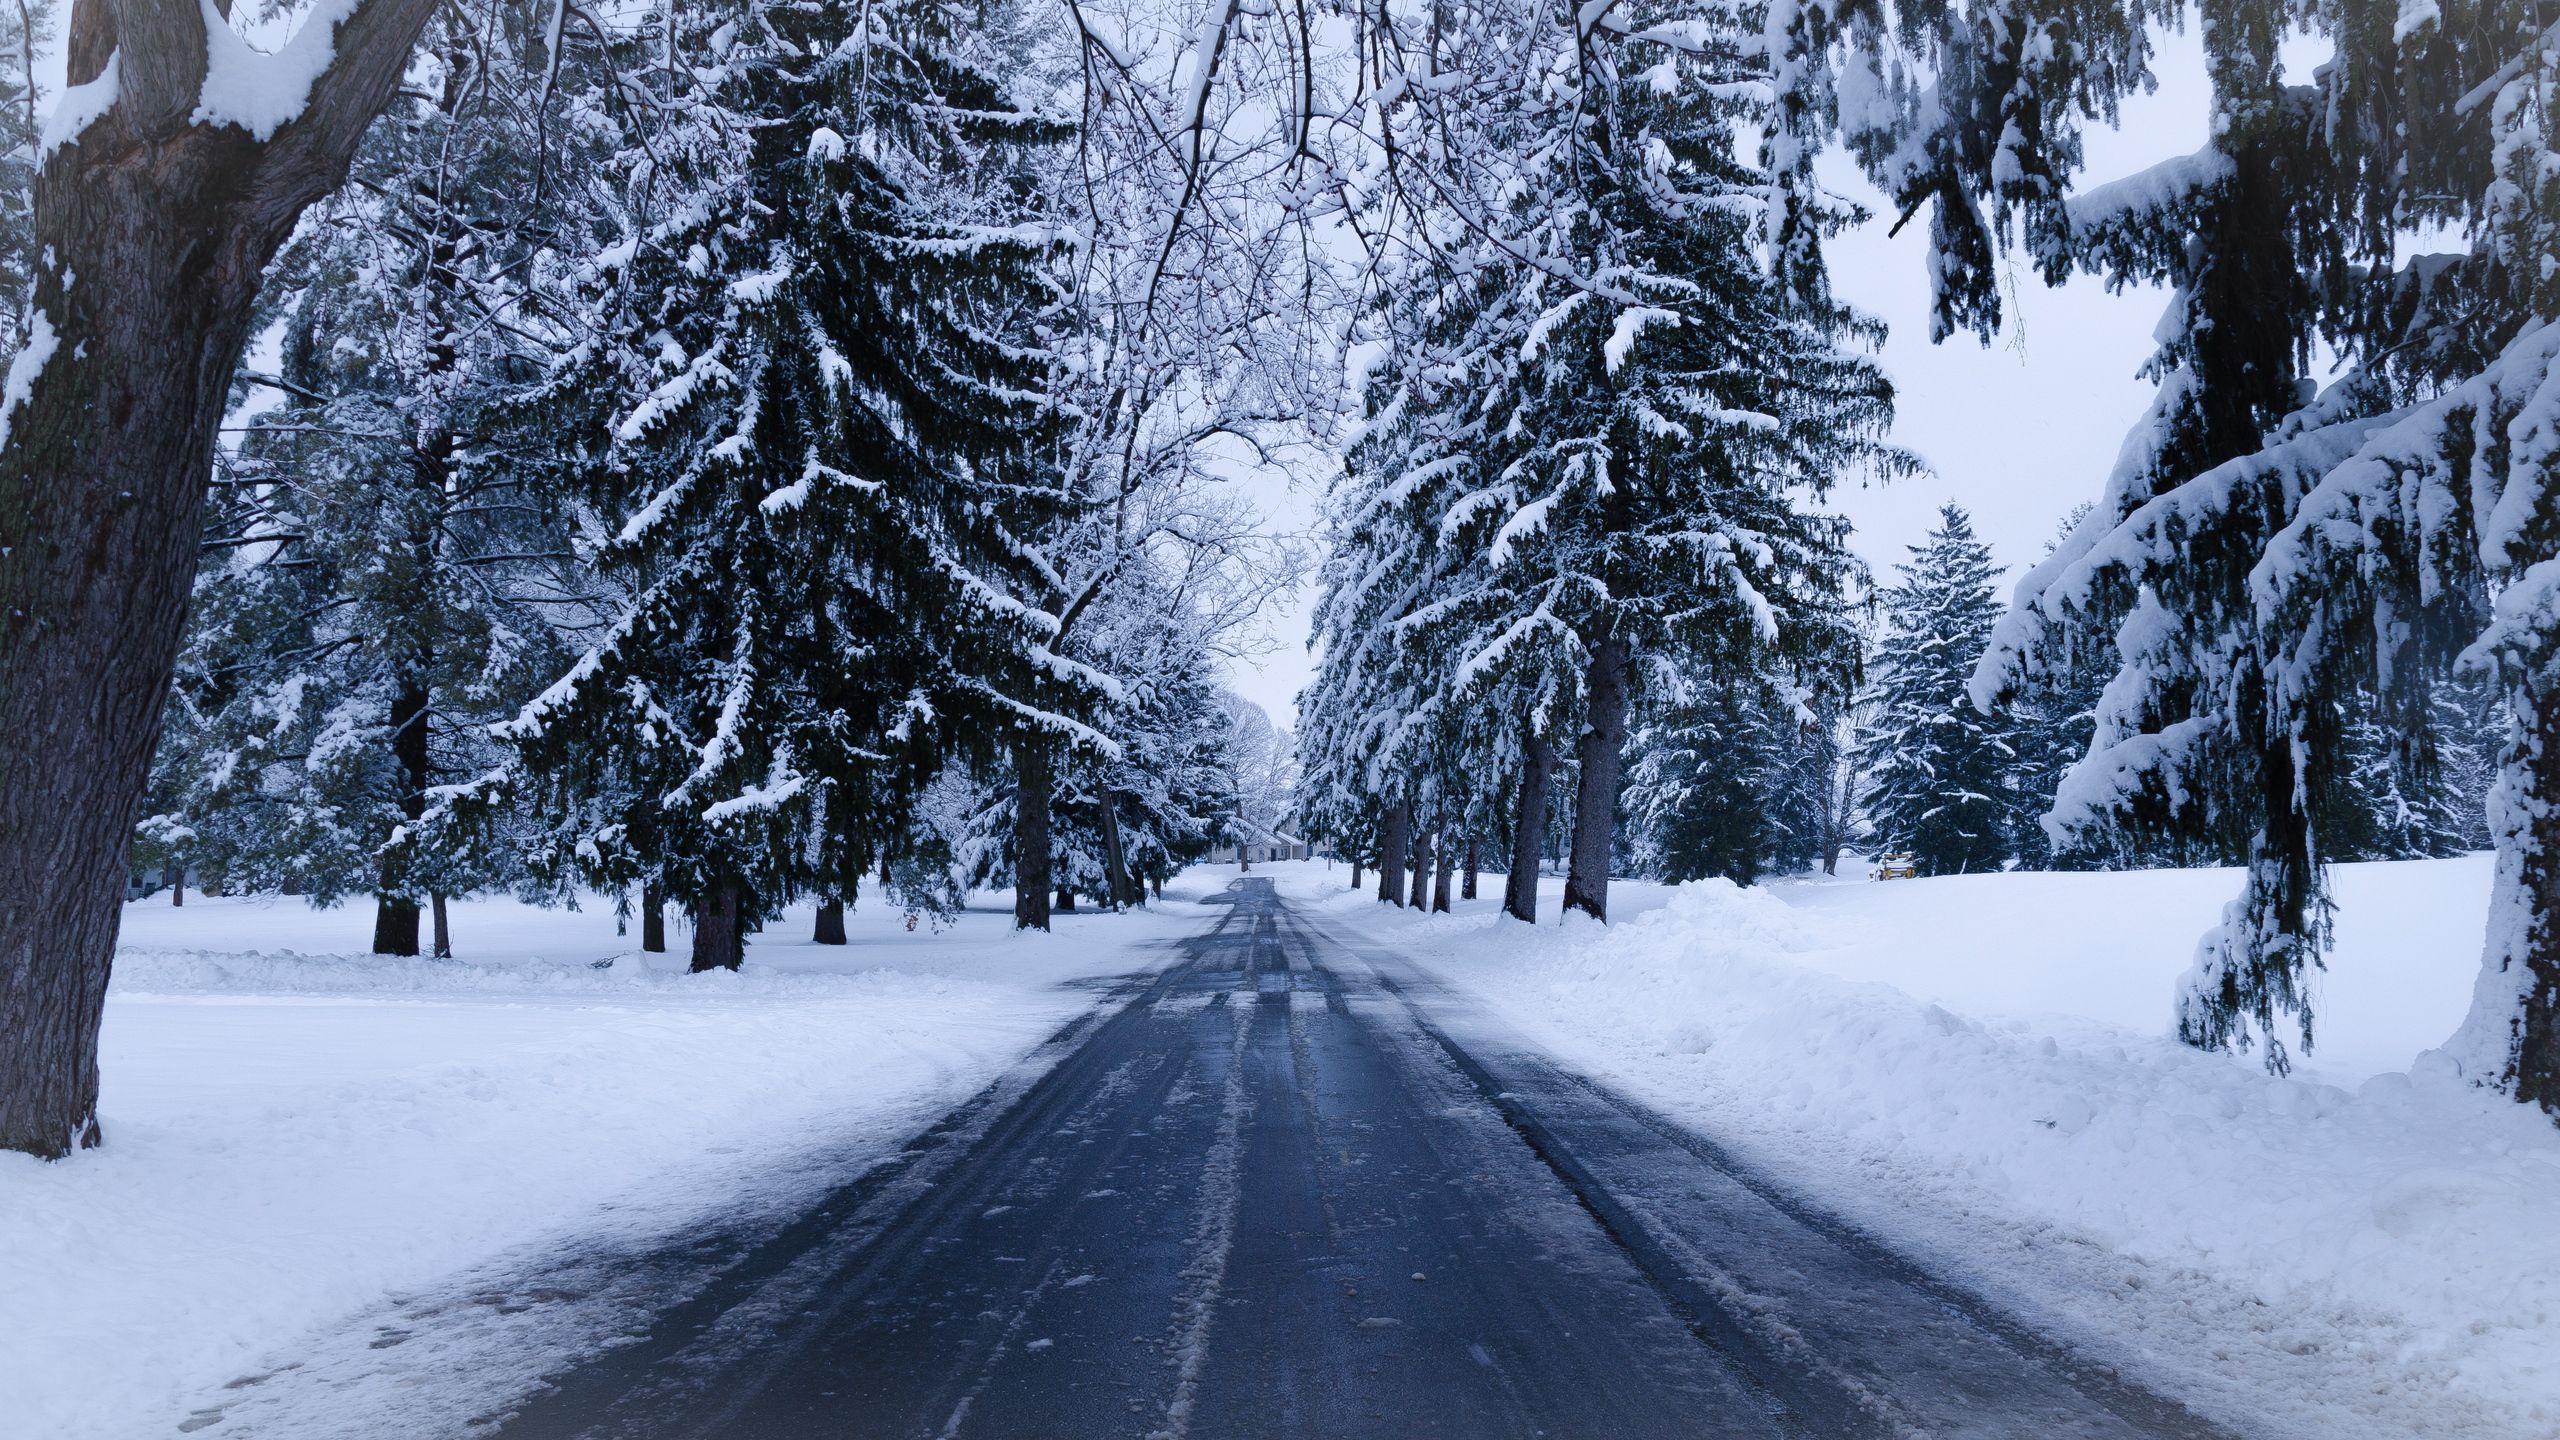 Download wallpaper 2560x1440 winter, road, snow, trees, winter landscape widescreen 16:9 HD background